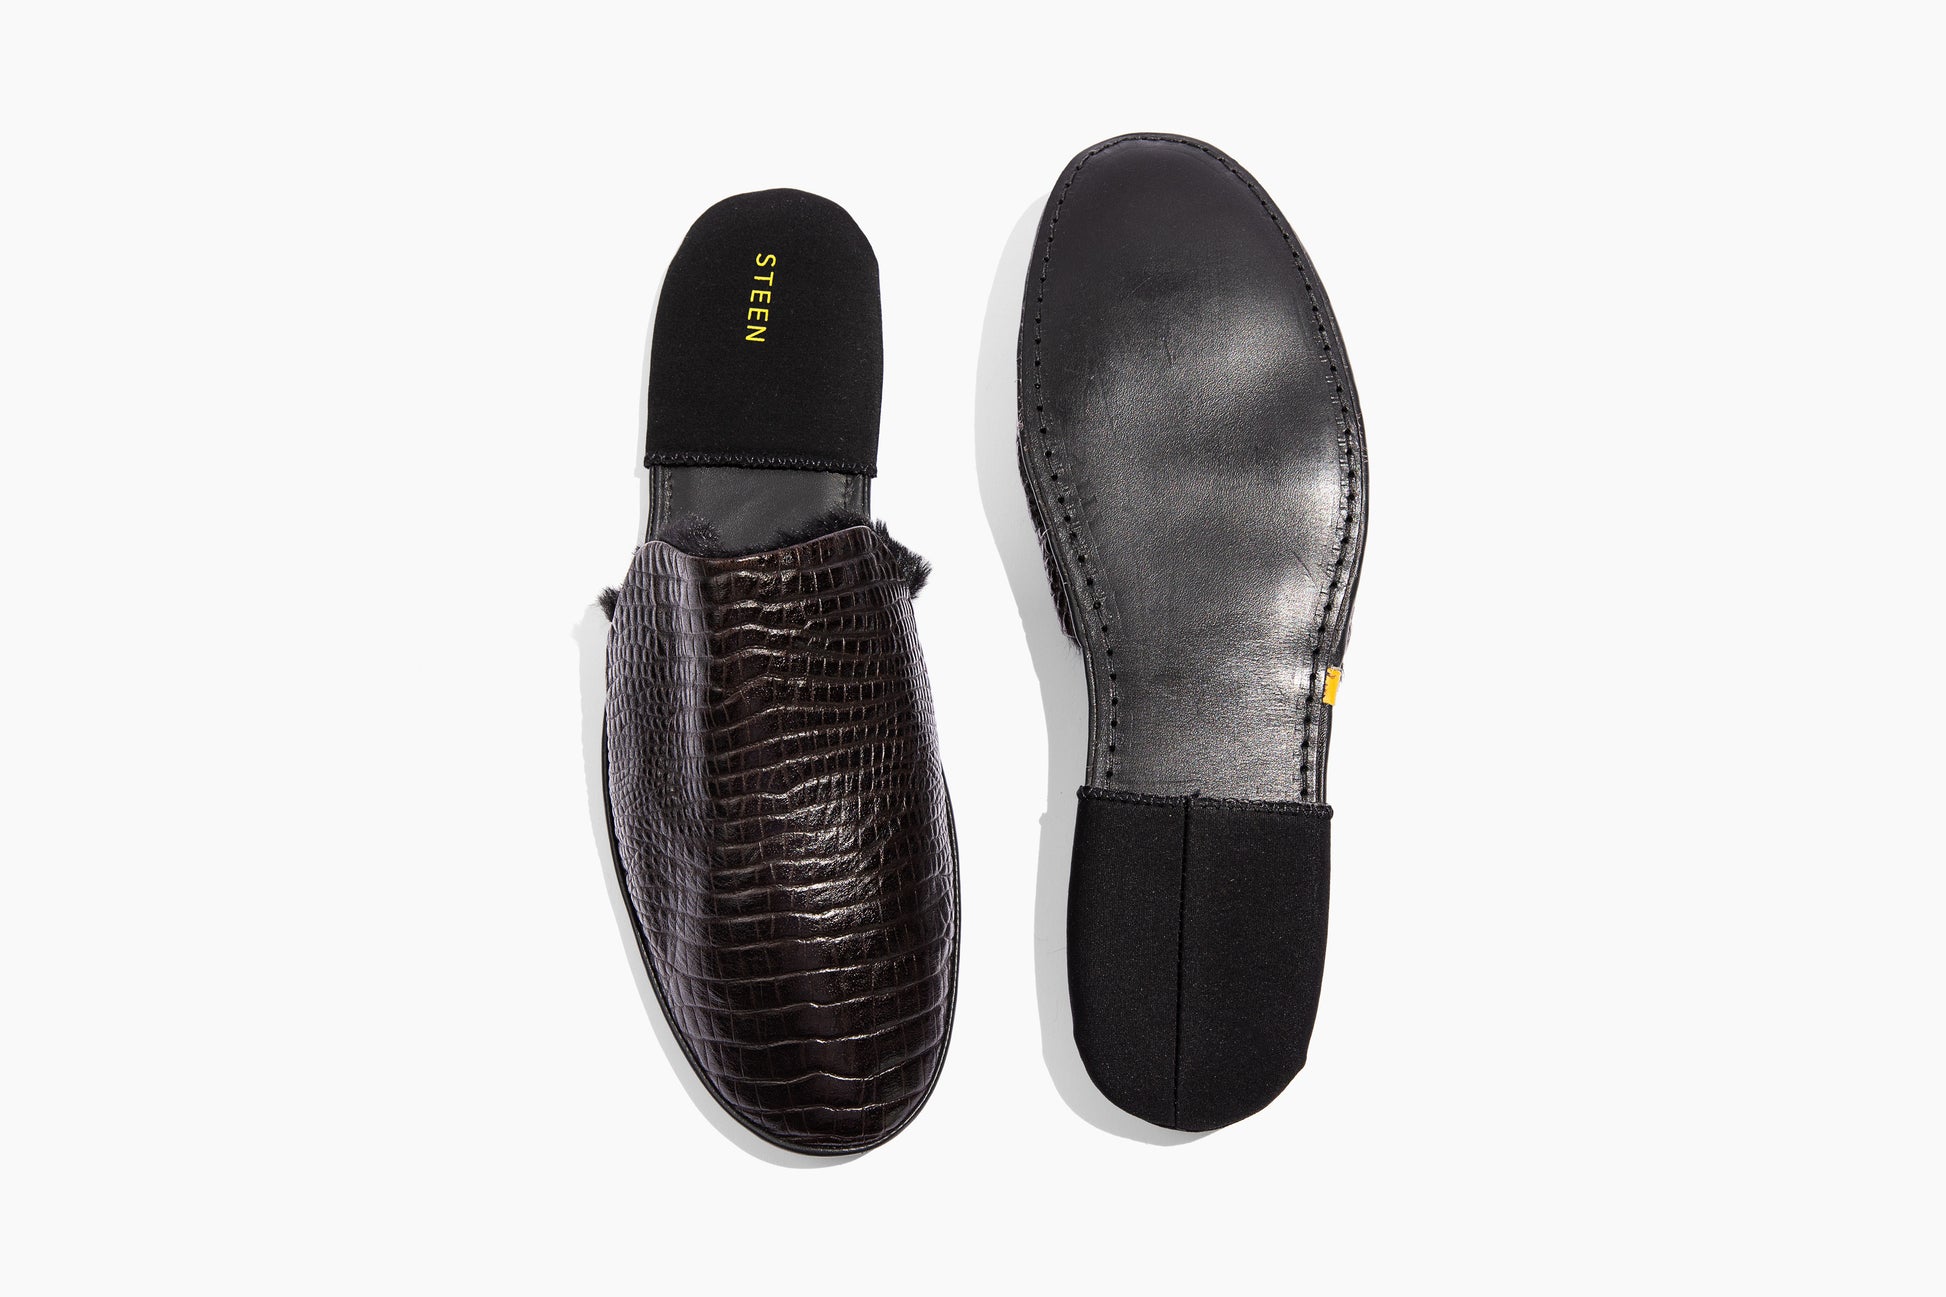 Luxury crocodile embossed leather. Black Eco-fur lining. Foldable travel slipper. Handmade in Italy.